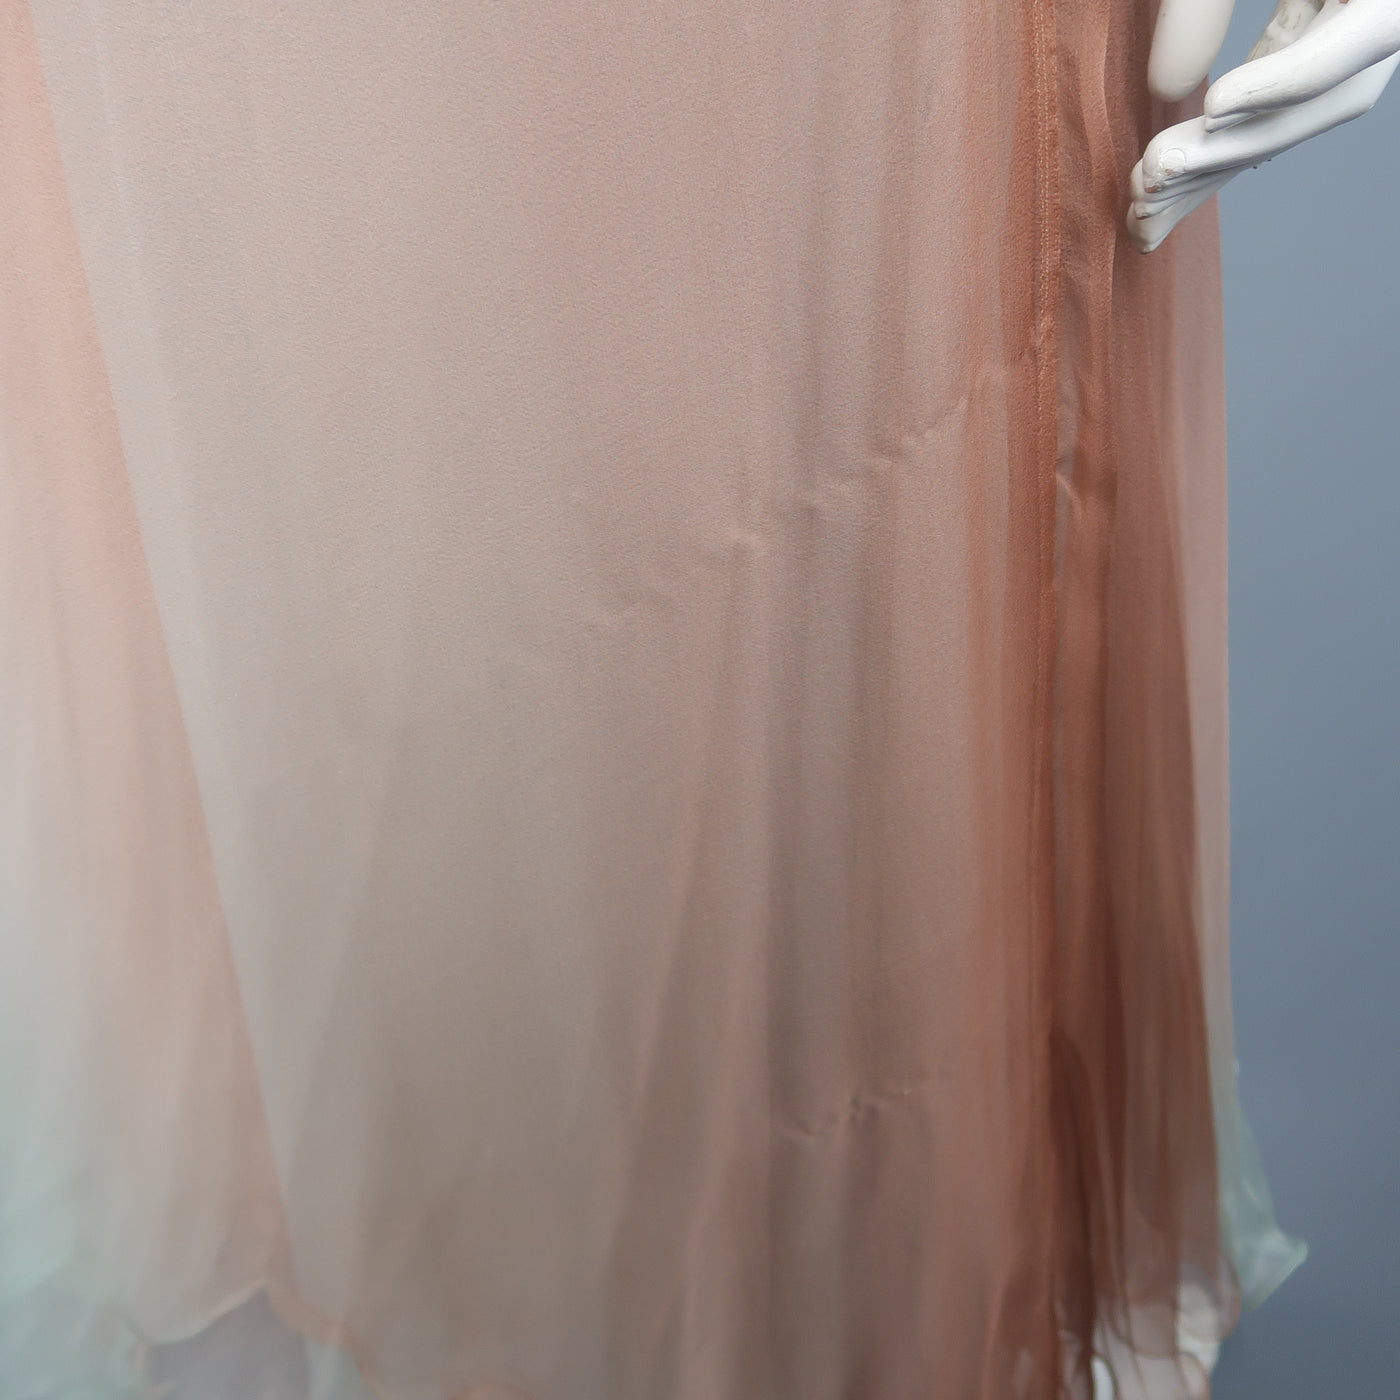 VICKY TIEL COUTURE Size 8 Aqua Tan & Purple Pleated Silk Strapless Dress